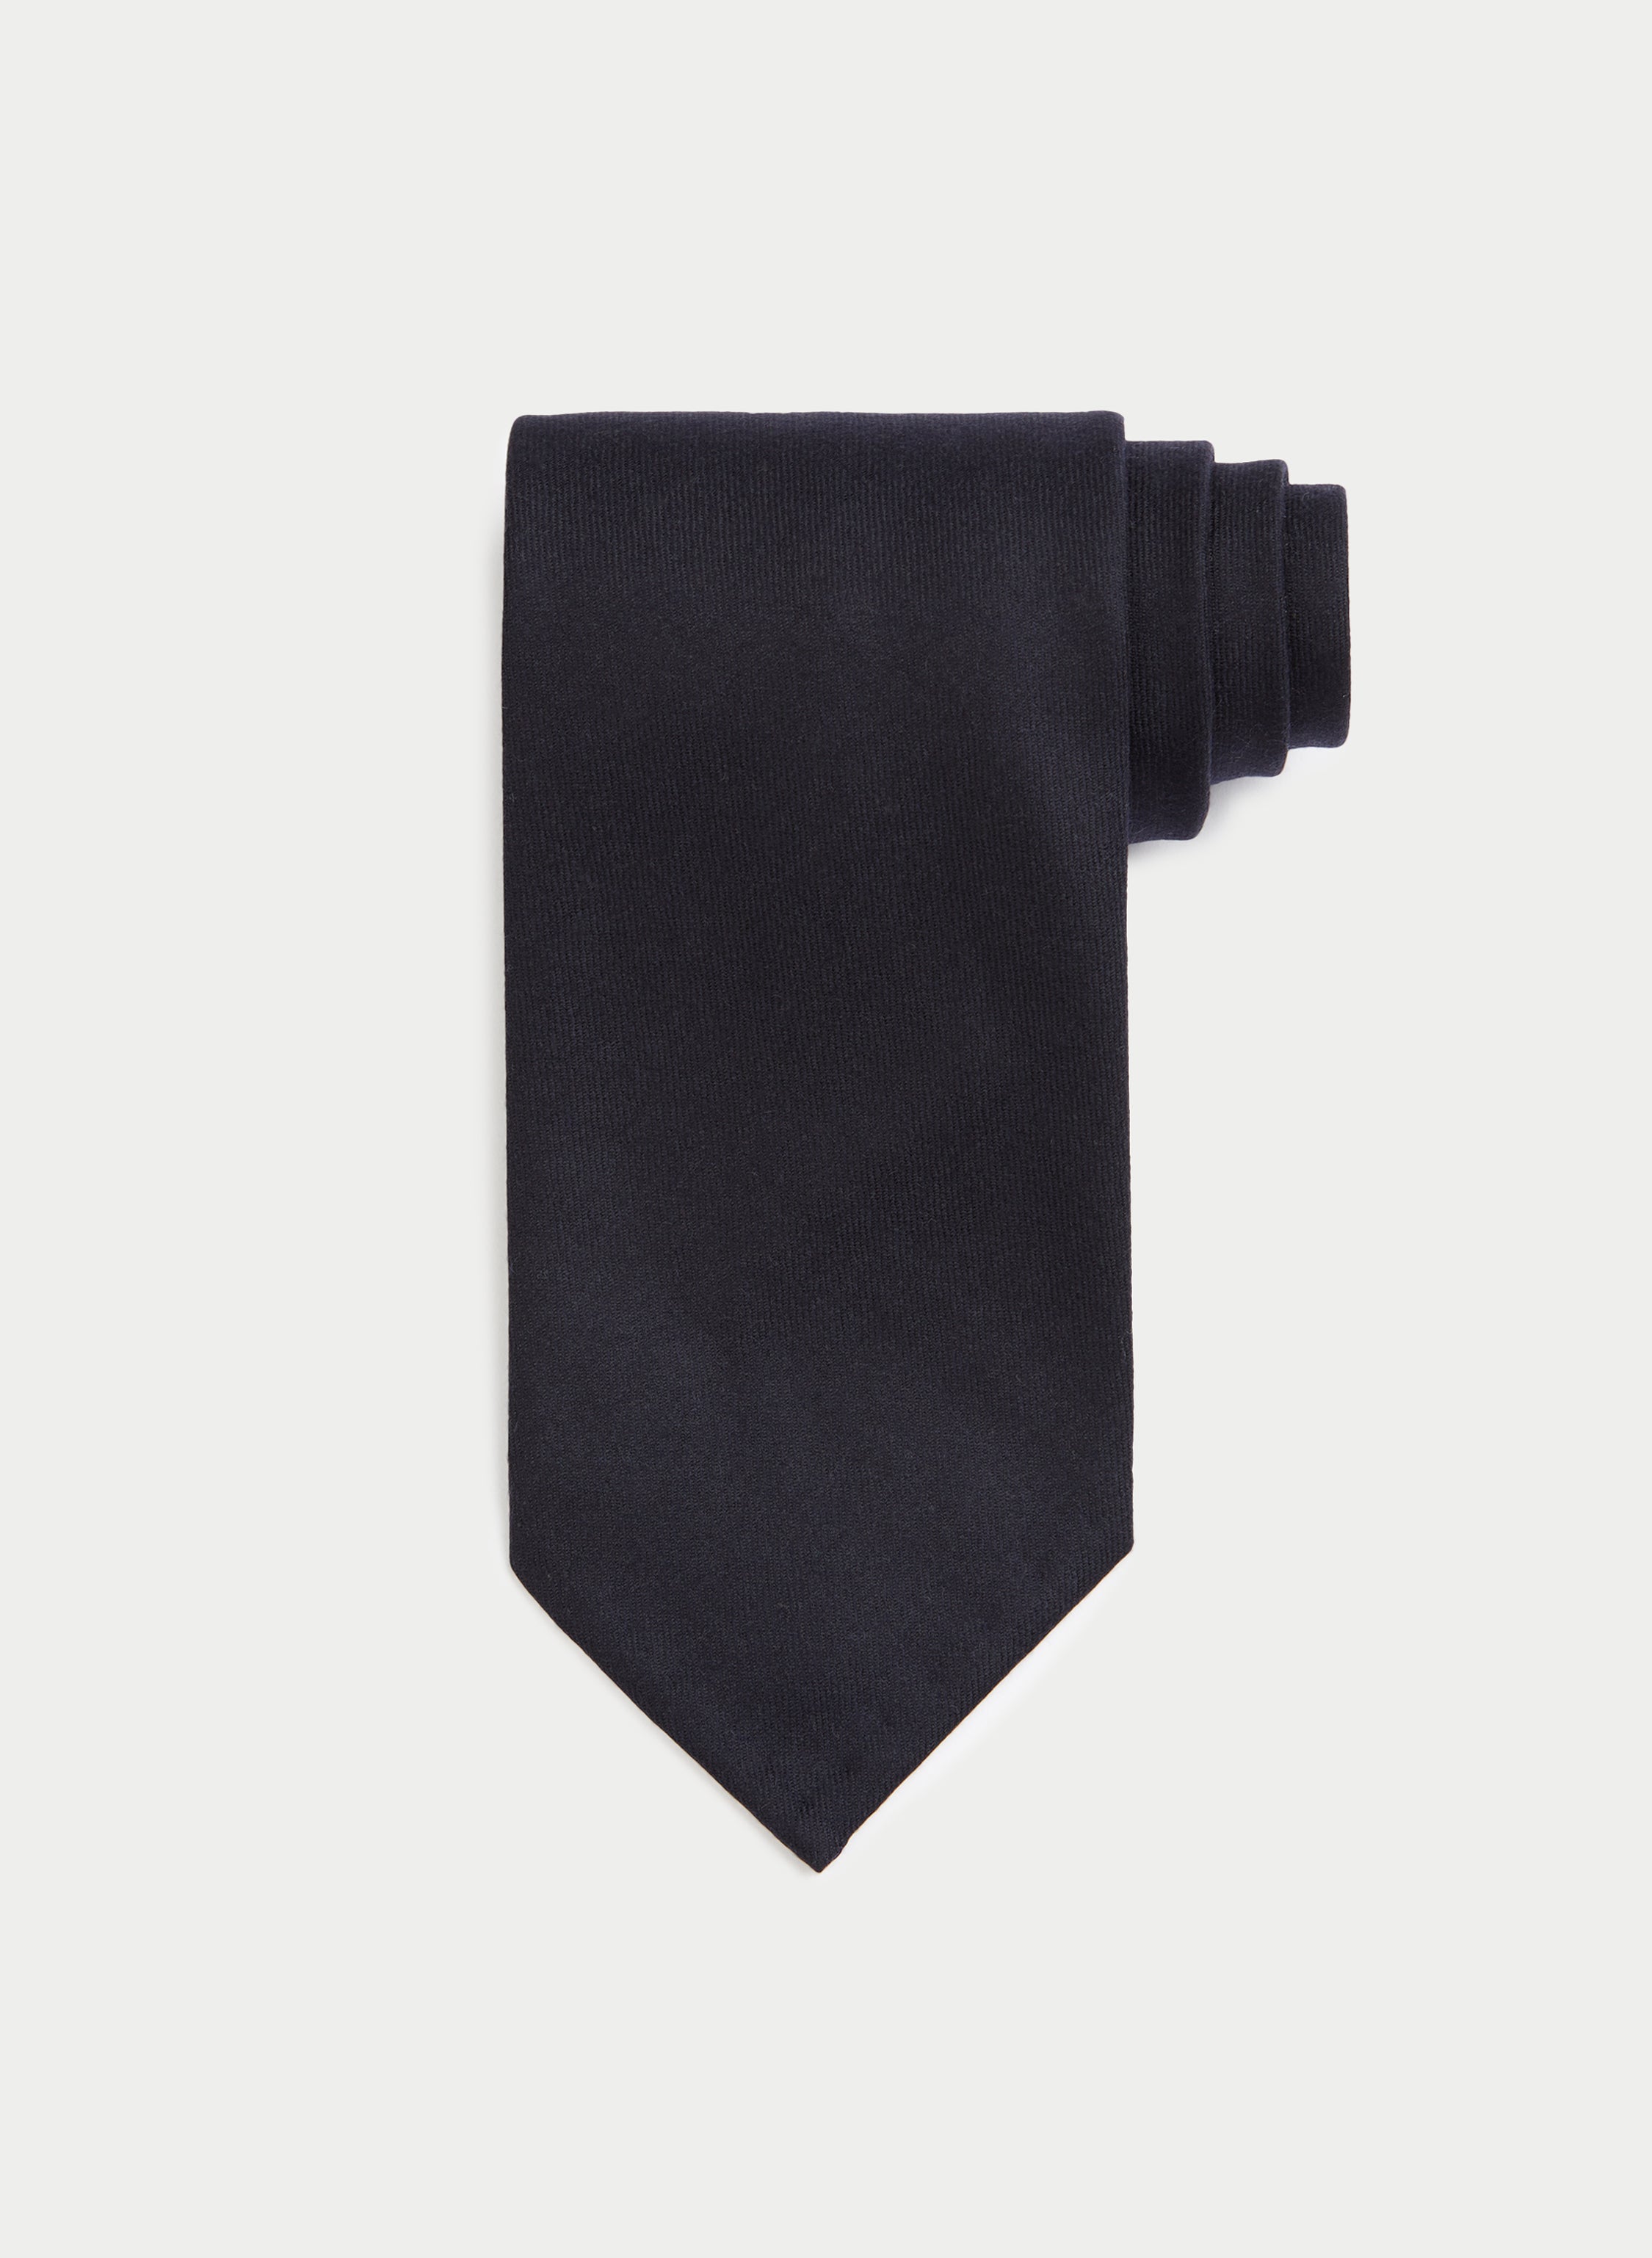 Wool Tie Darkest Navy Product Image